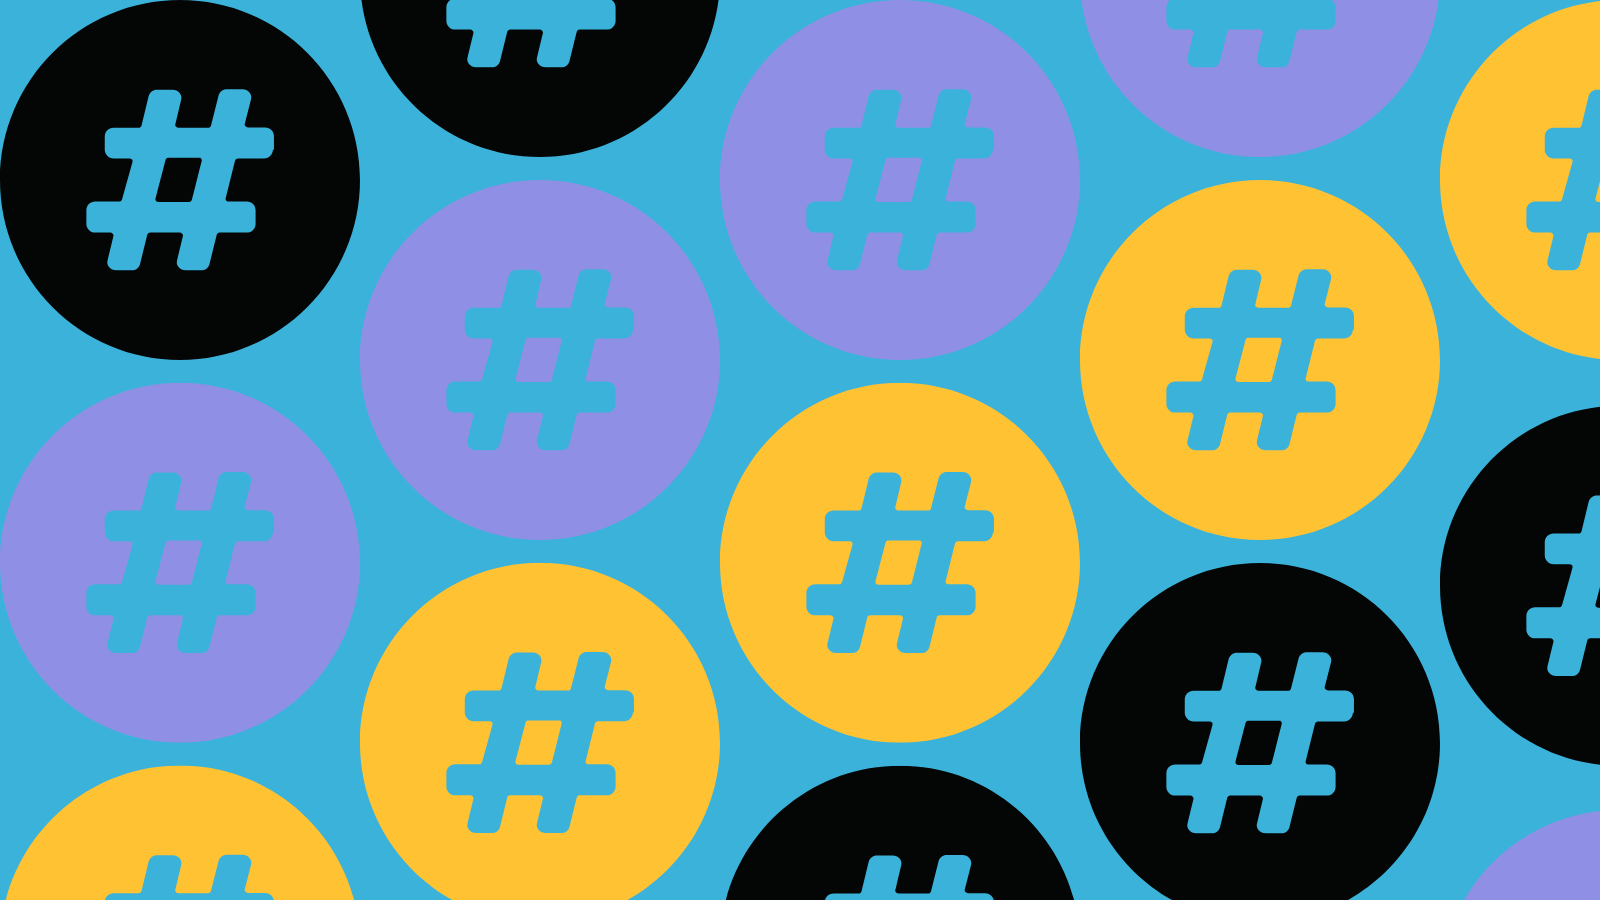 Diagonal rows of hashtags in circles